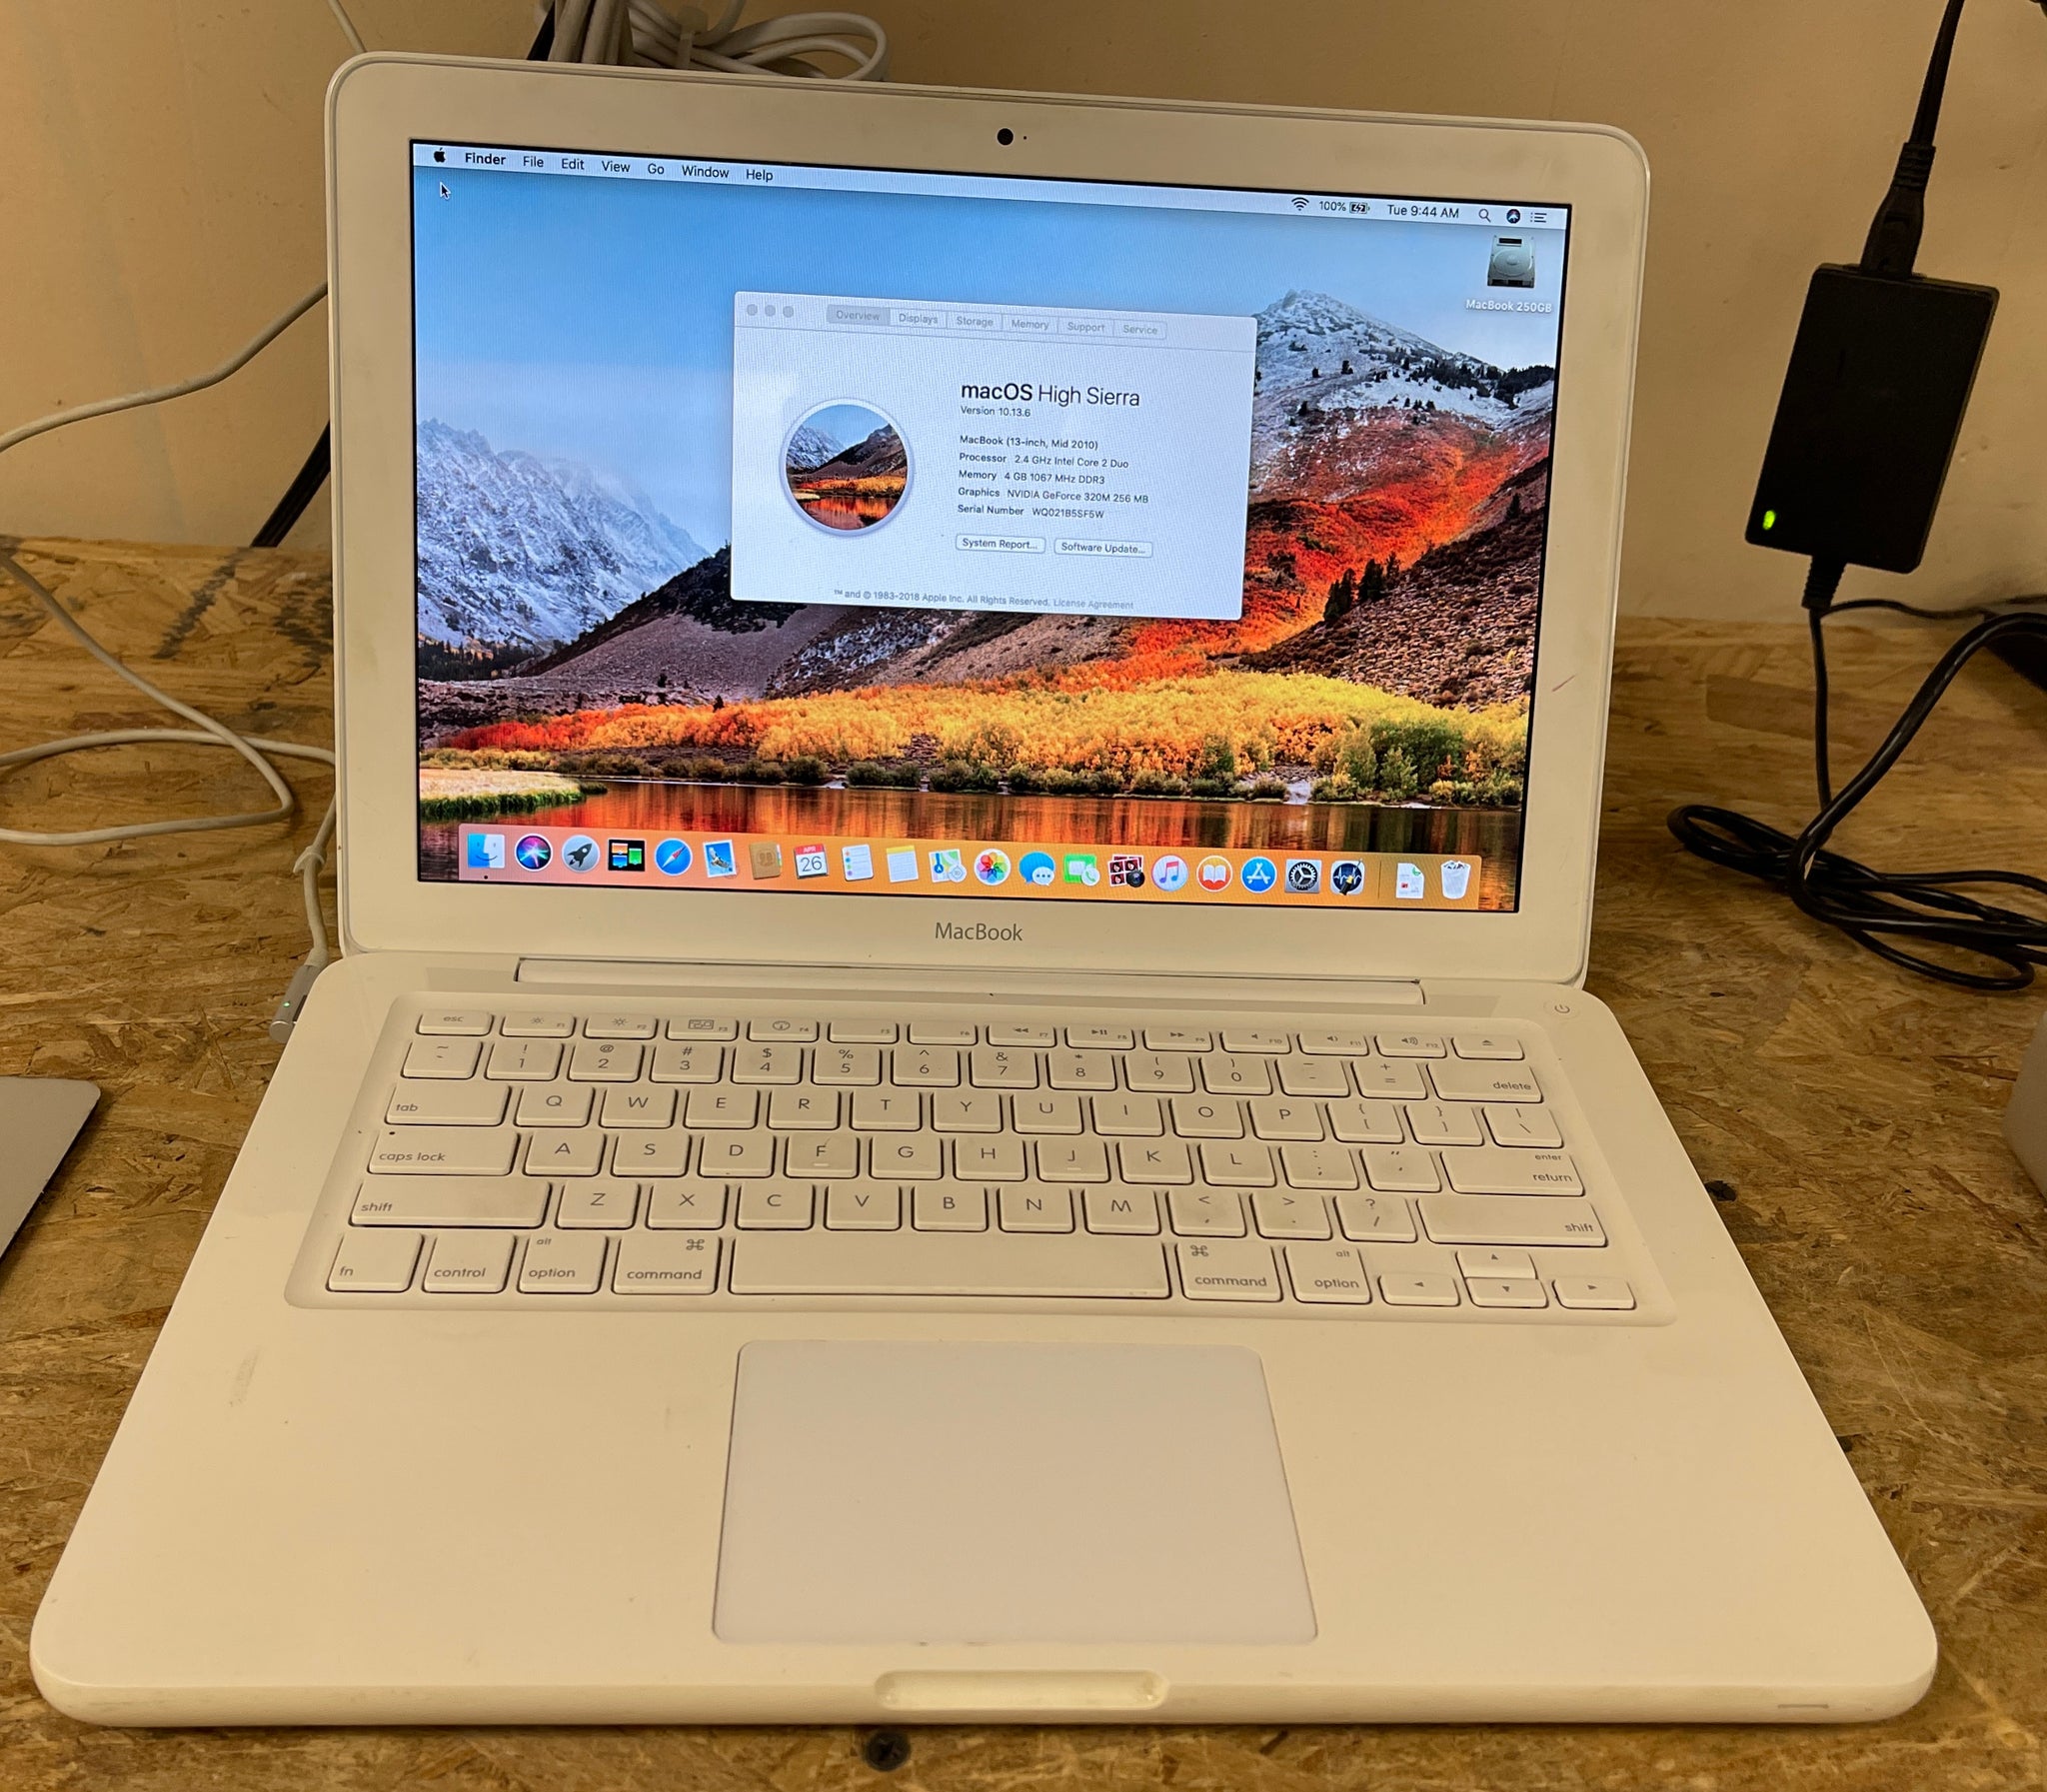 Apple MacBook 13-inch Mid 2010 2.4GHz Intel Core 2 Duo (MC516LL/A